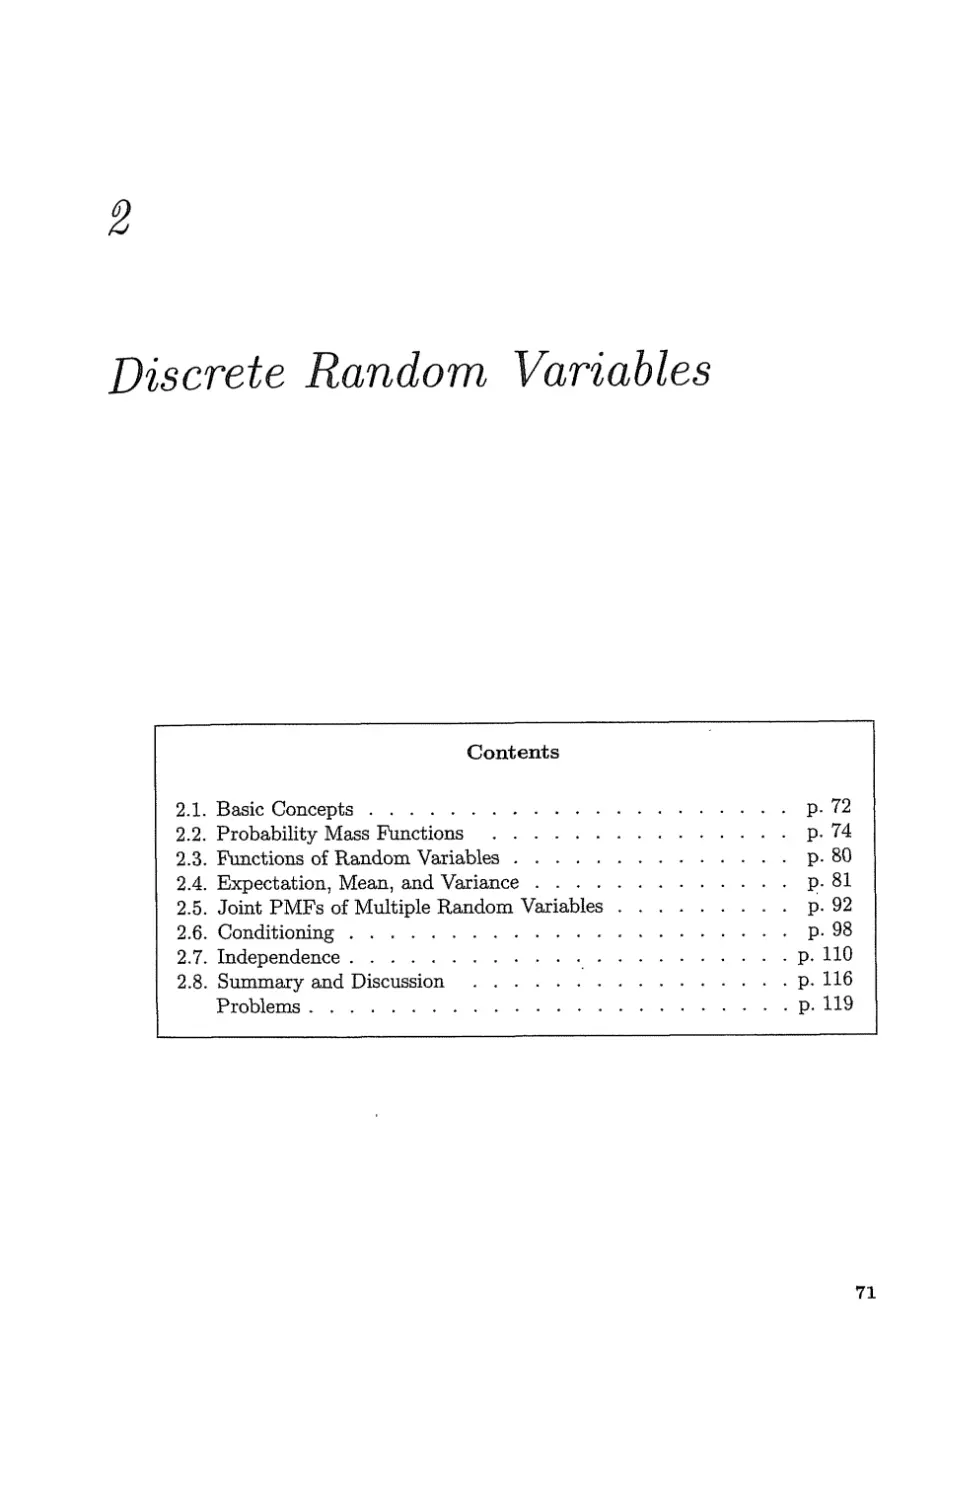 Chapter 2-Discrete Random Variables